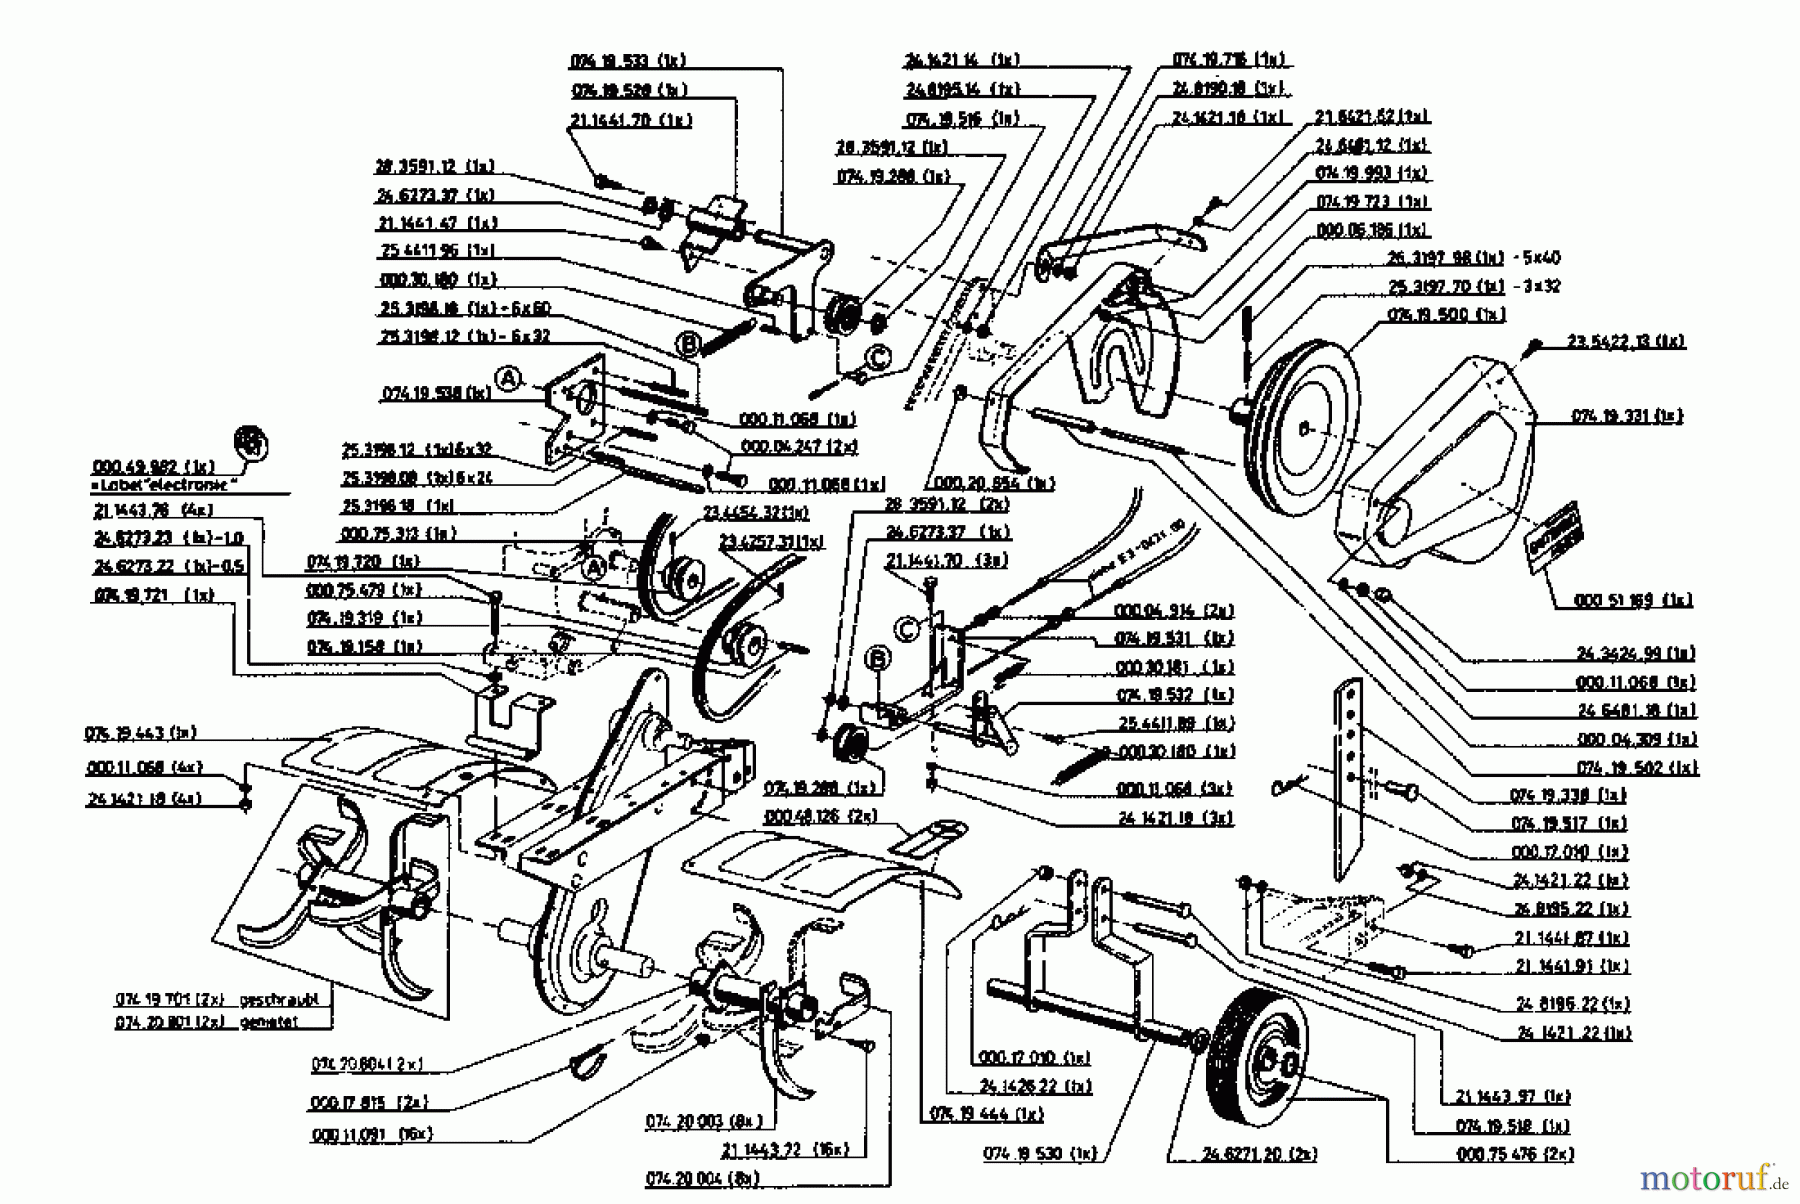  Gutbrod Motobineuse MB 62-52 07518.02  (1995) Machine de base